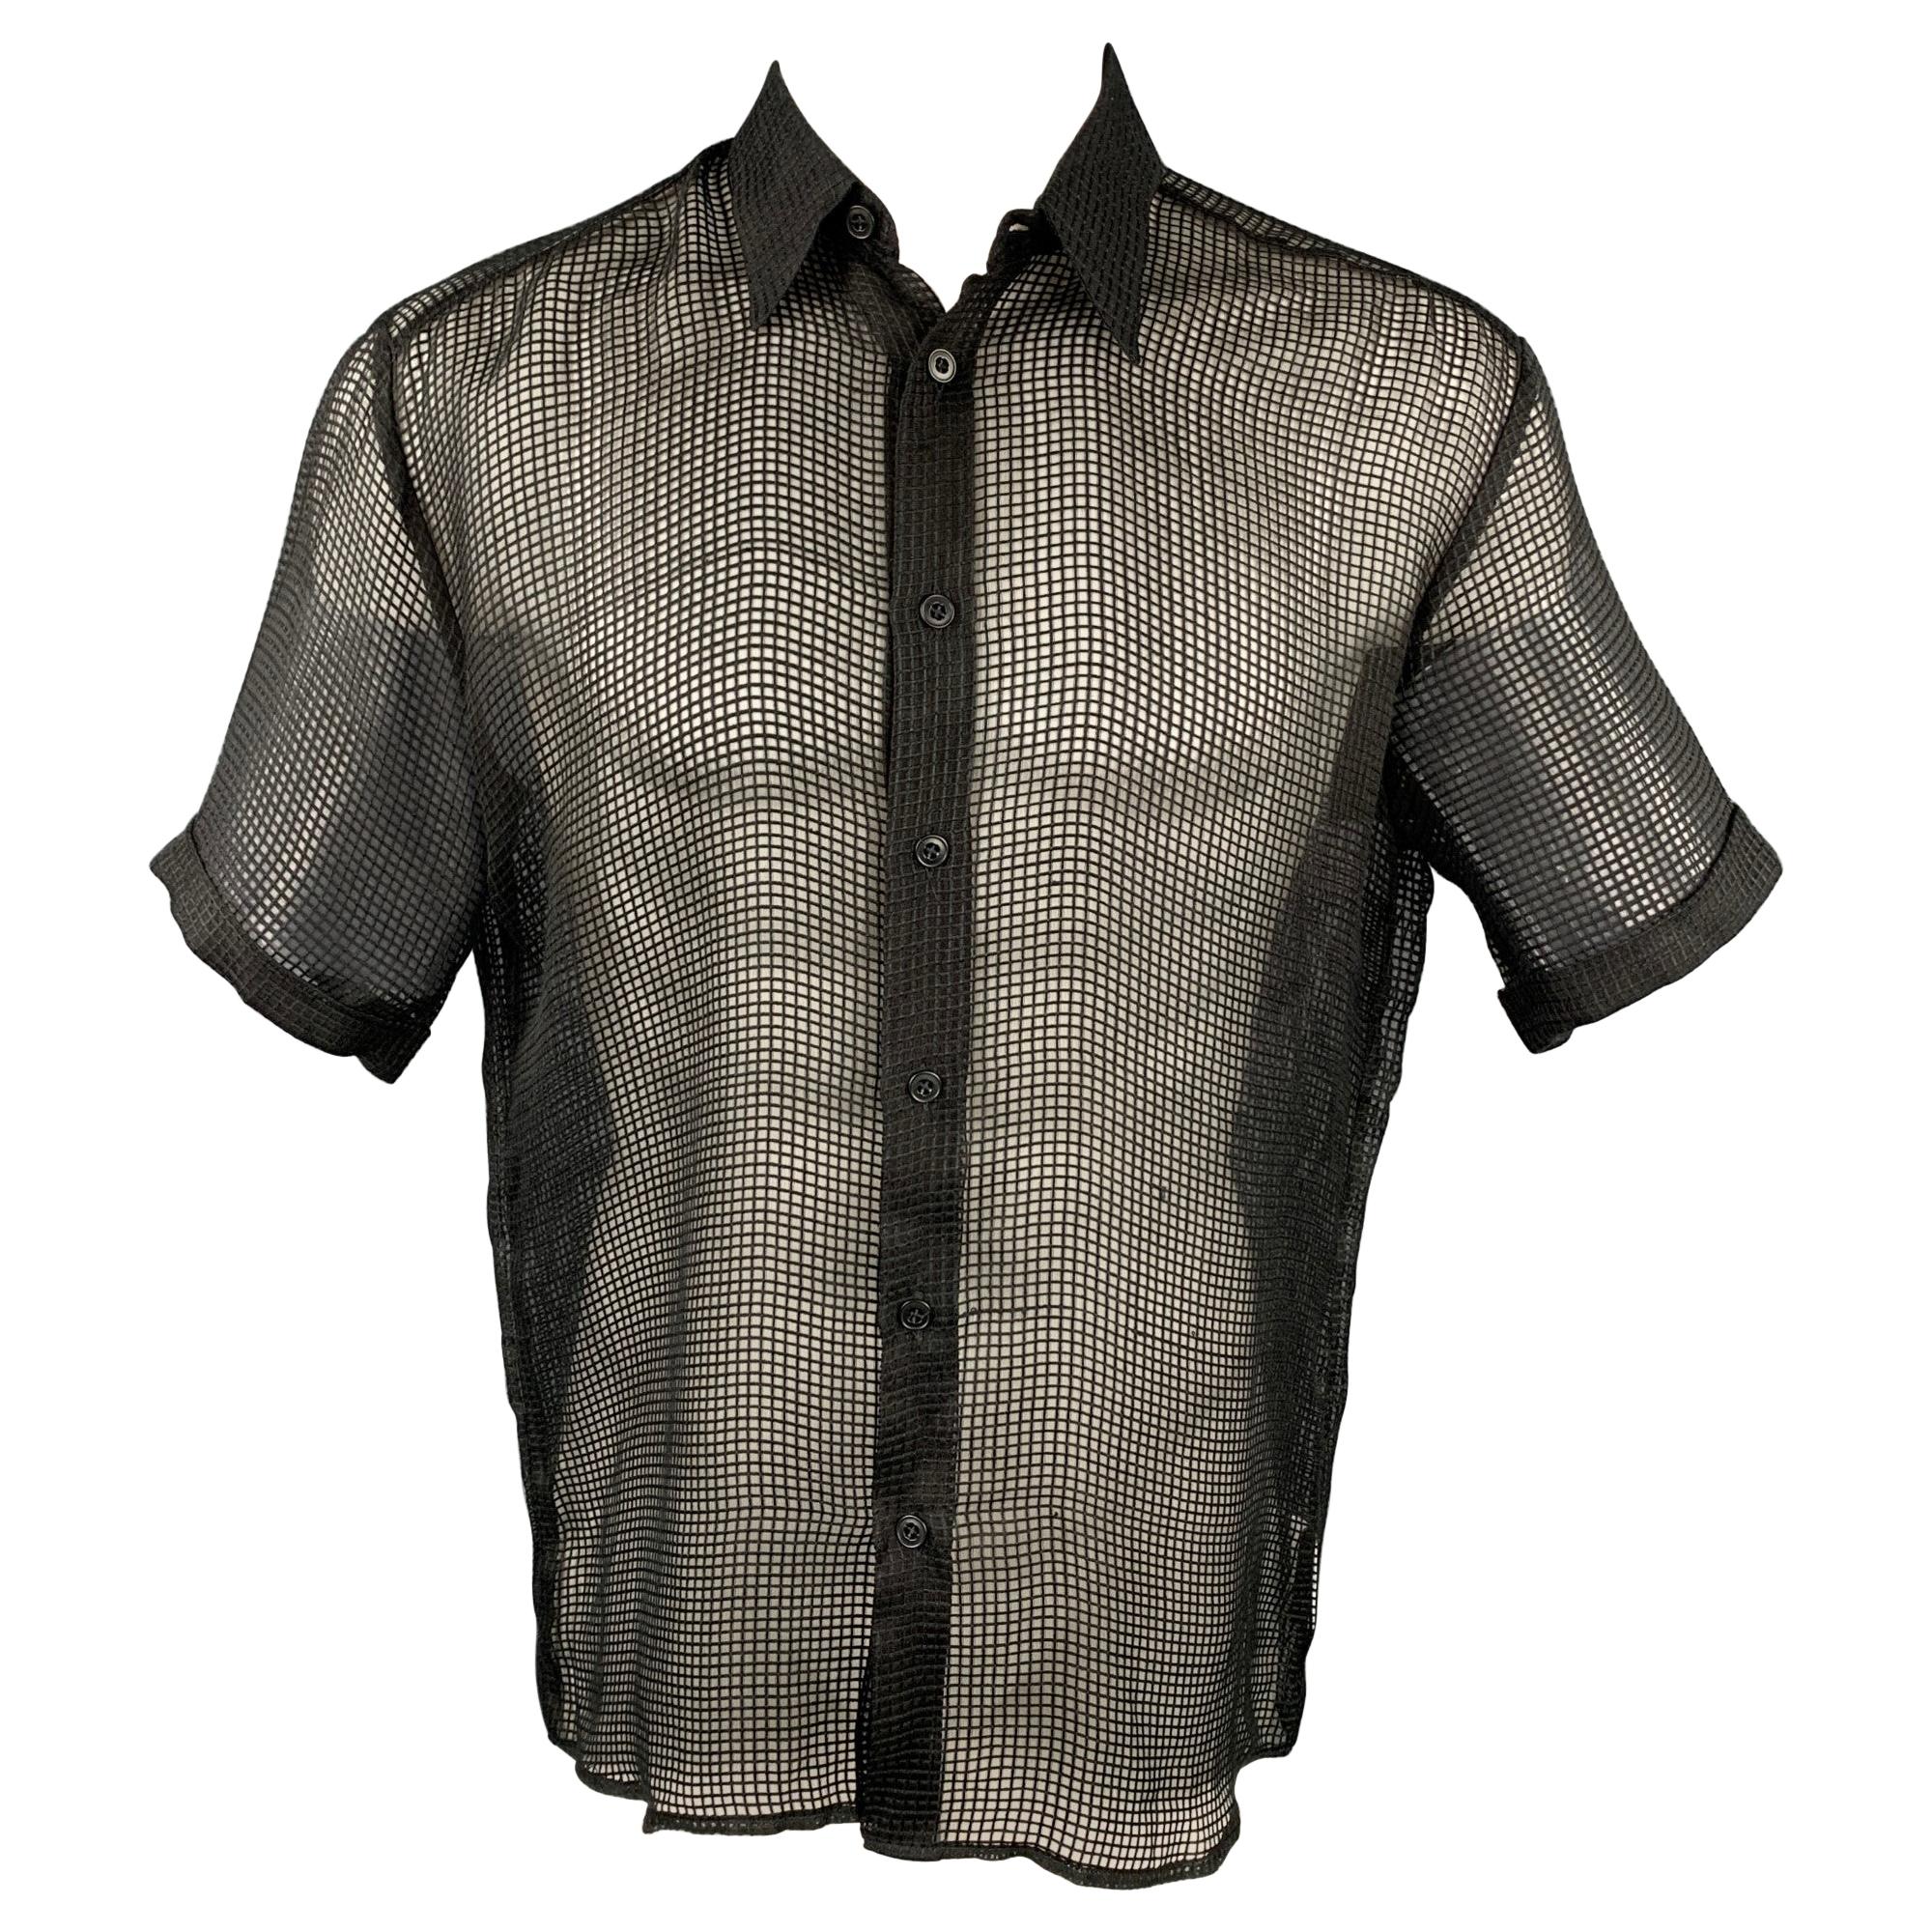 VERSUS by GIANNI VERSACE Size S Black Grid Silk Button Up Short Sleeve Shirt